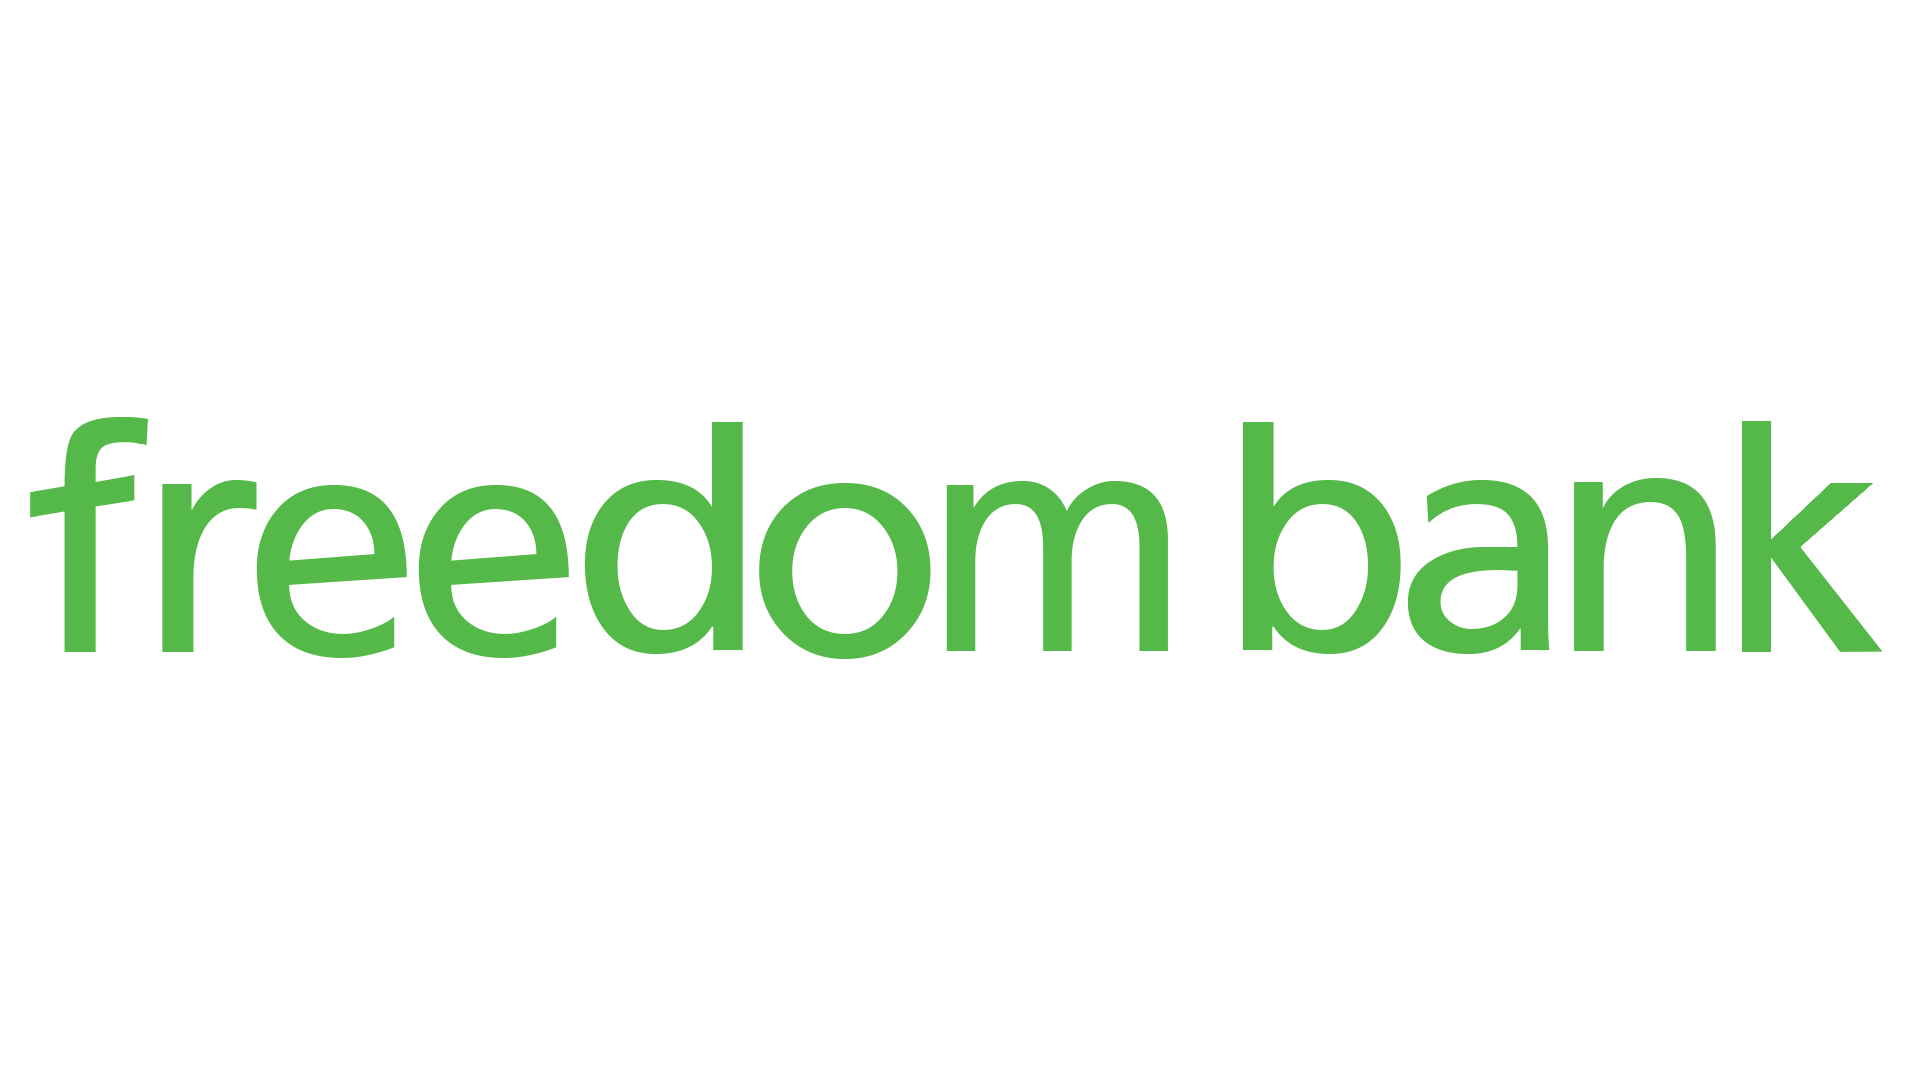 Freedom Bank Logo